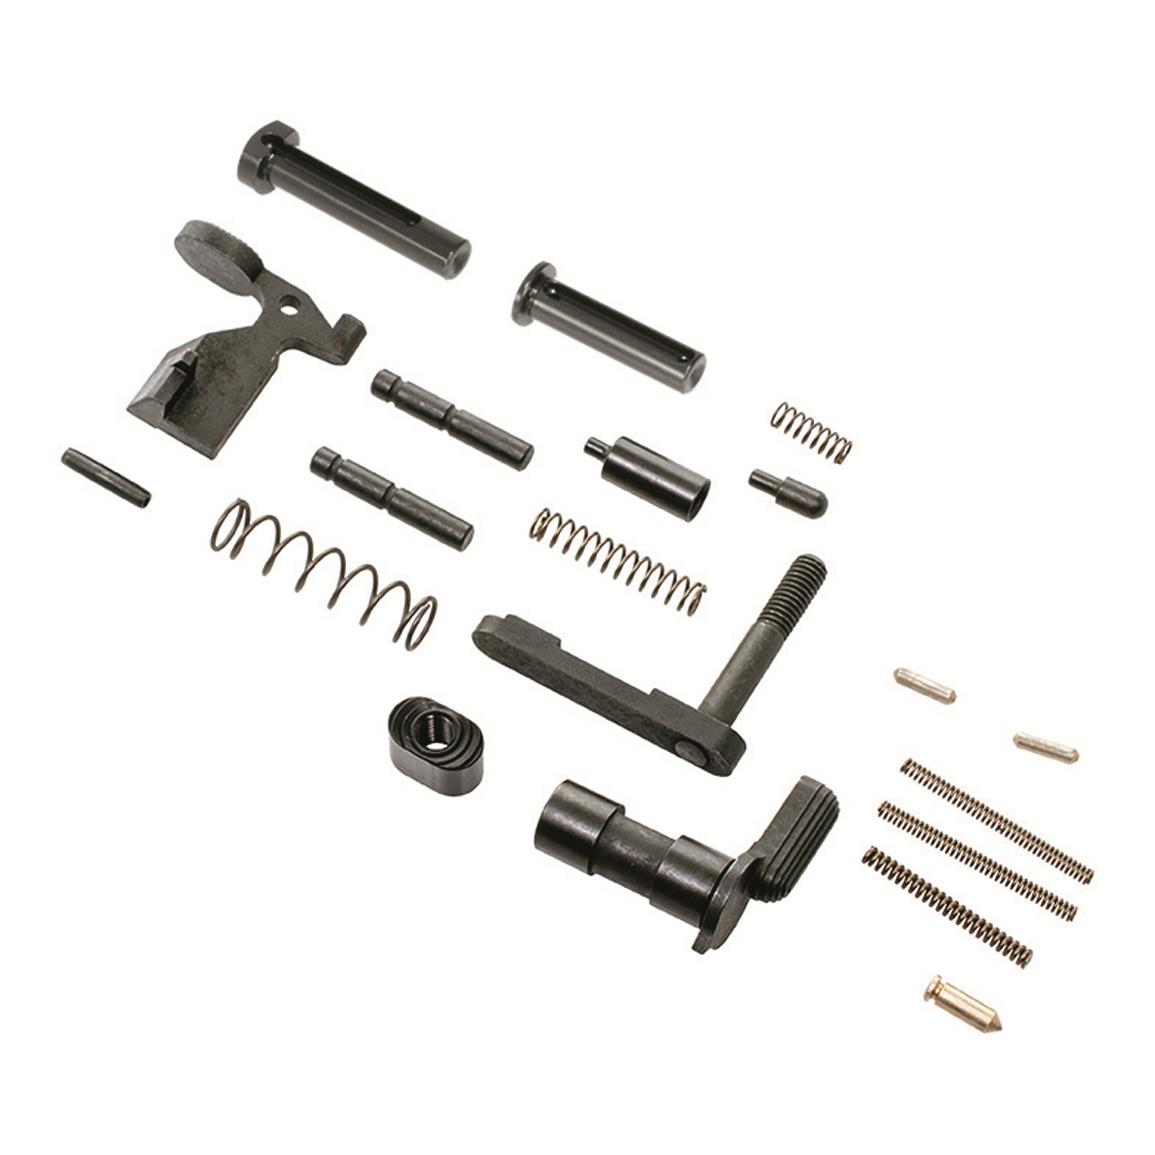 CMMG Gun Builder's Lower Parts Kit for AR-15 Rifles